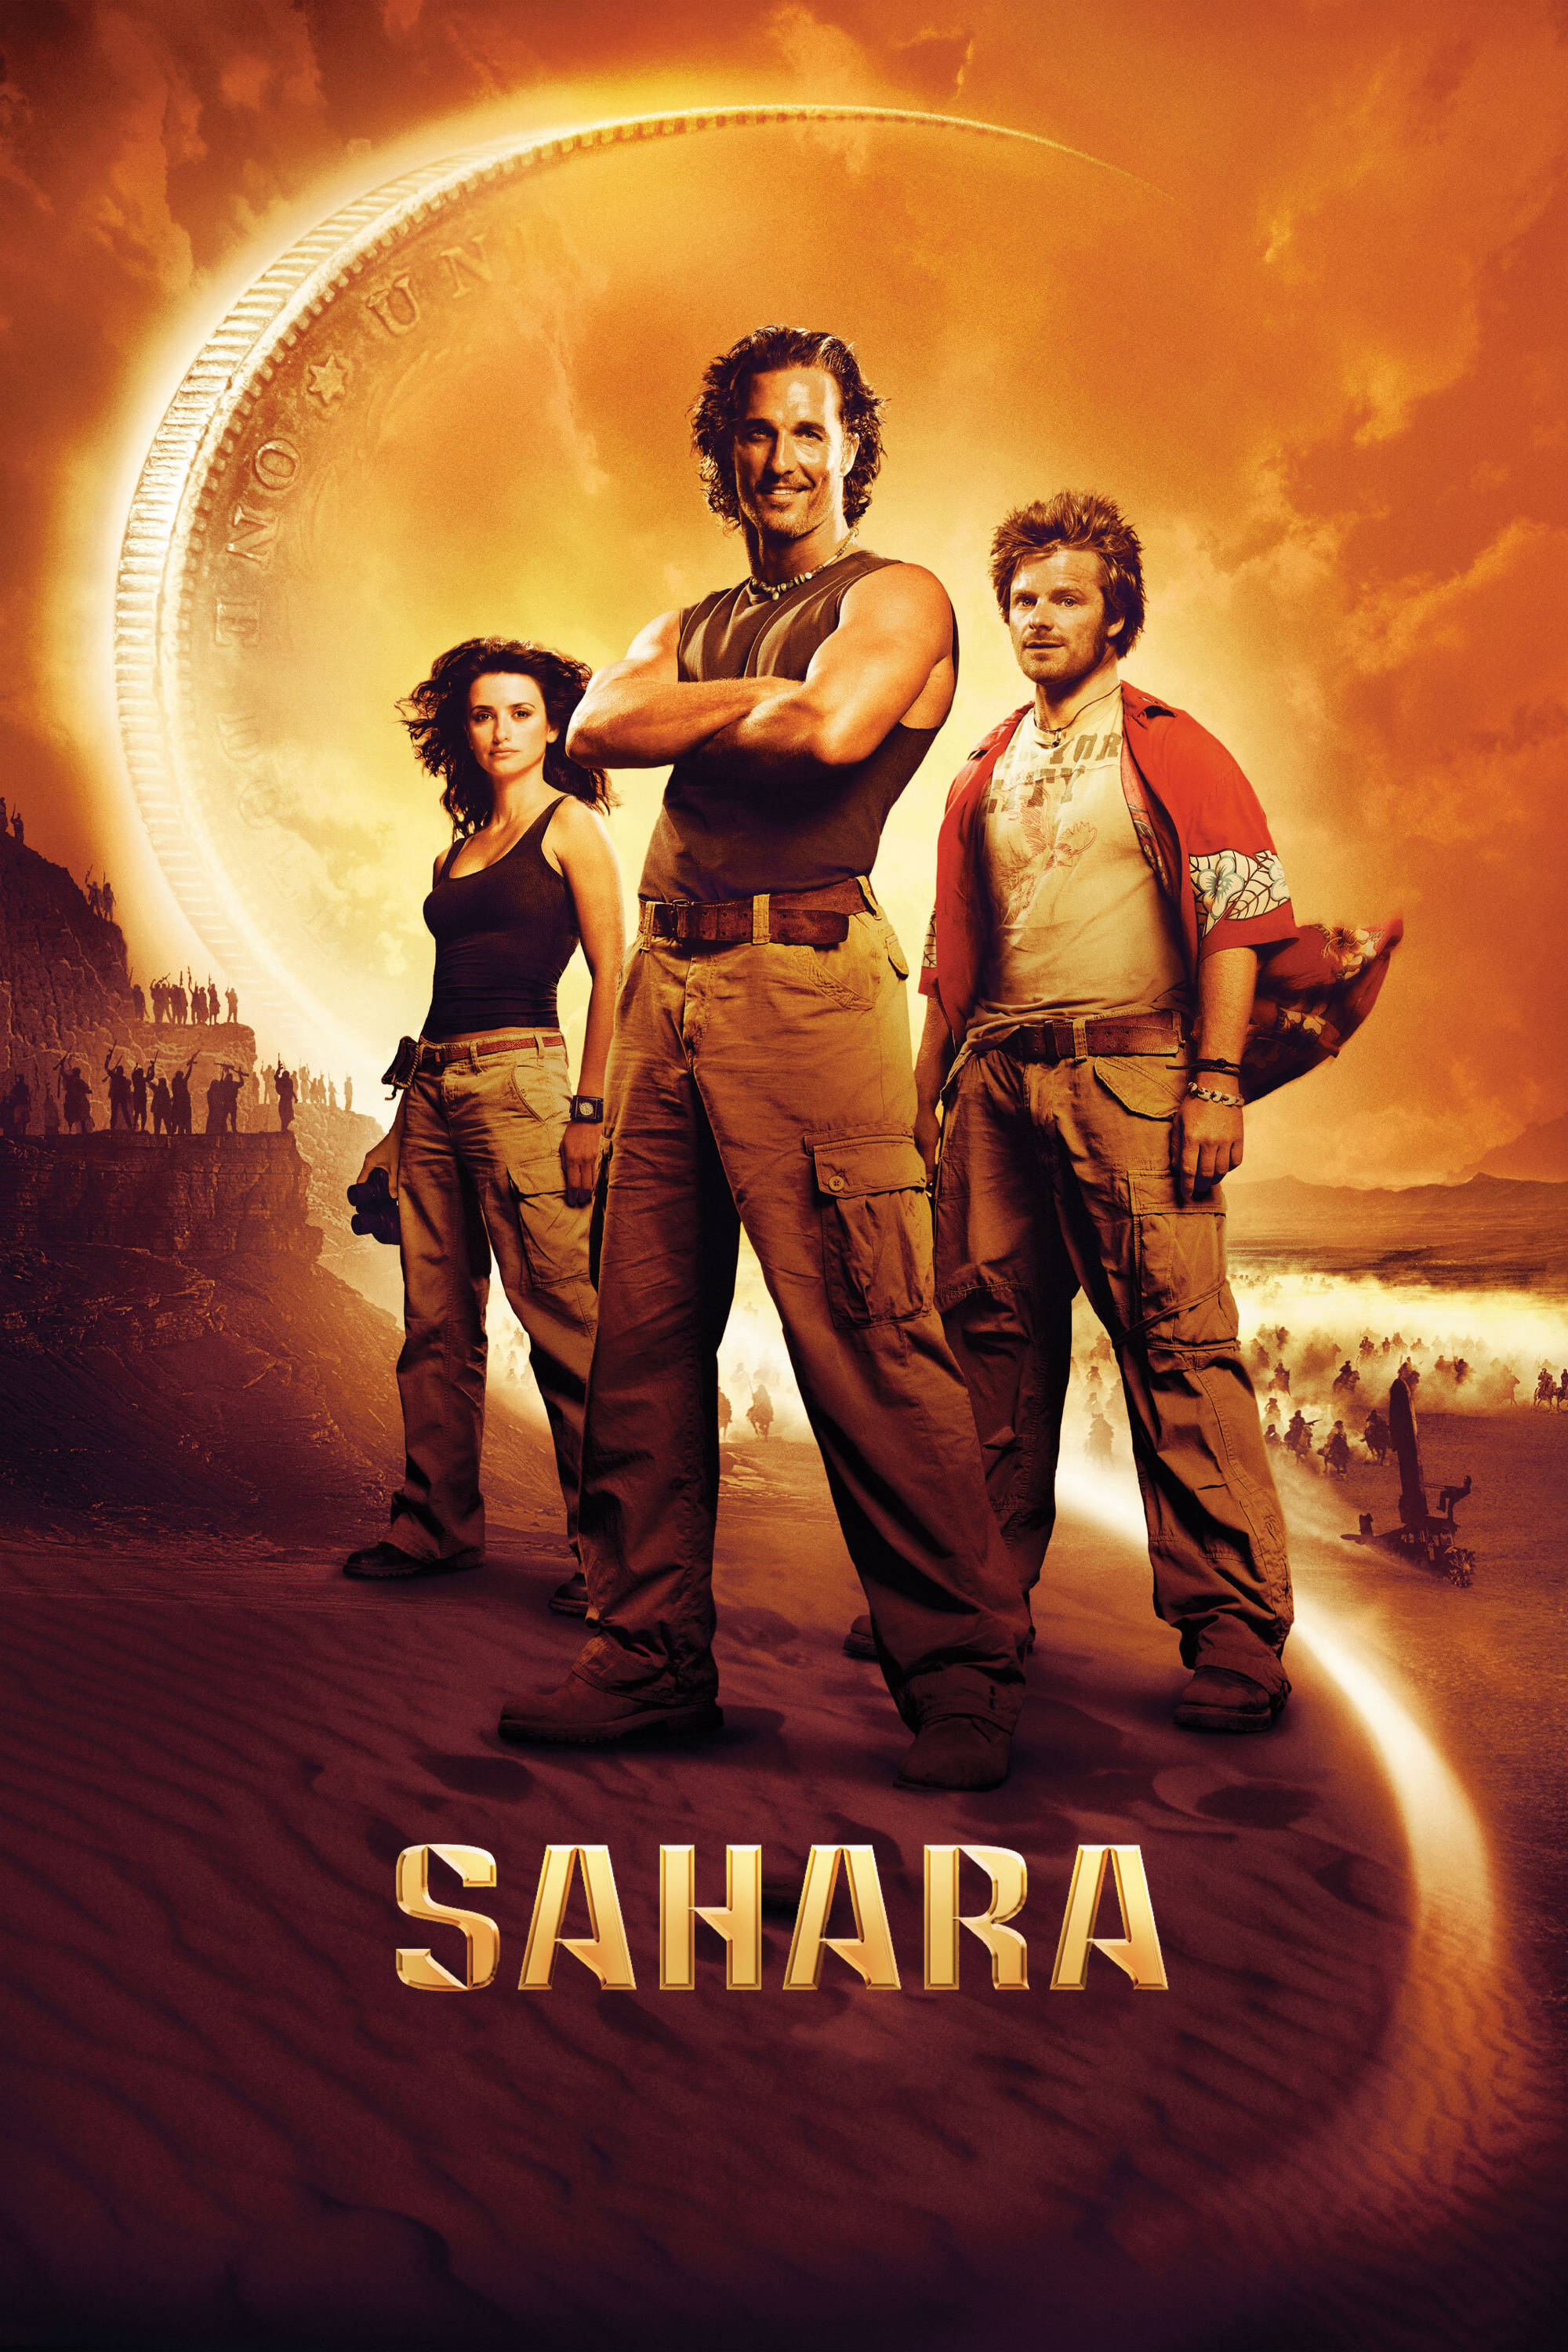 Sahara - Where to Watch and Stream - TV Guide